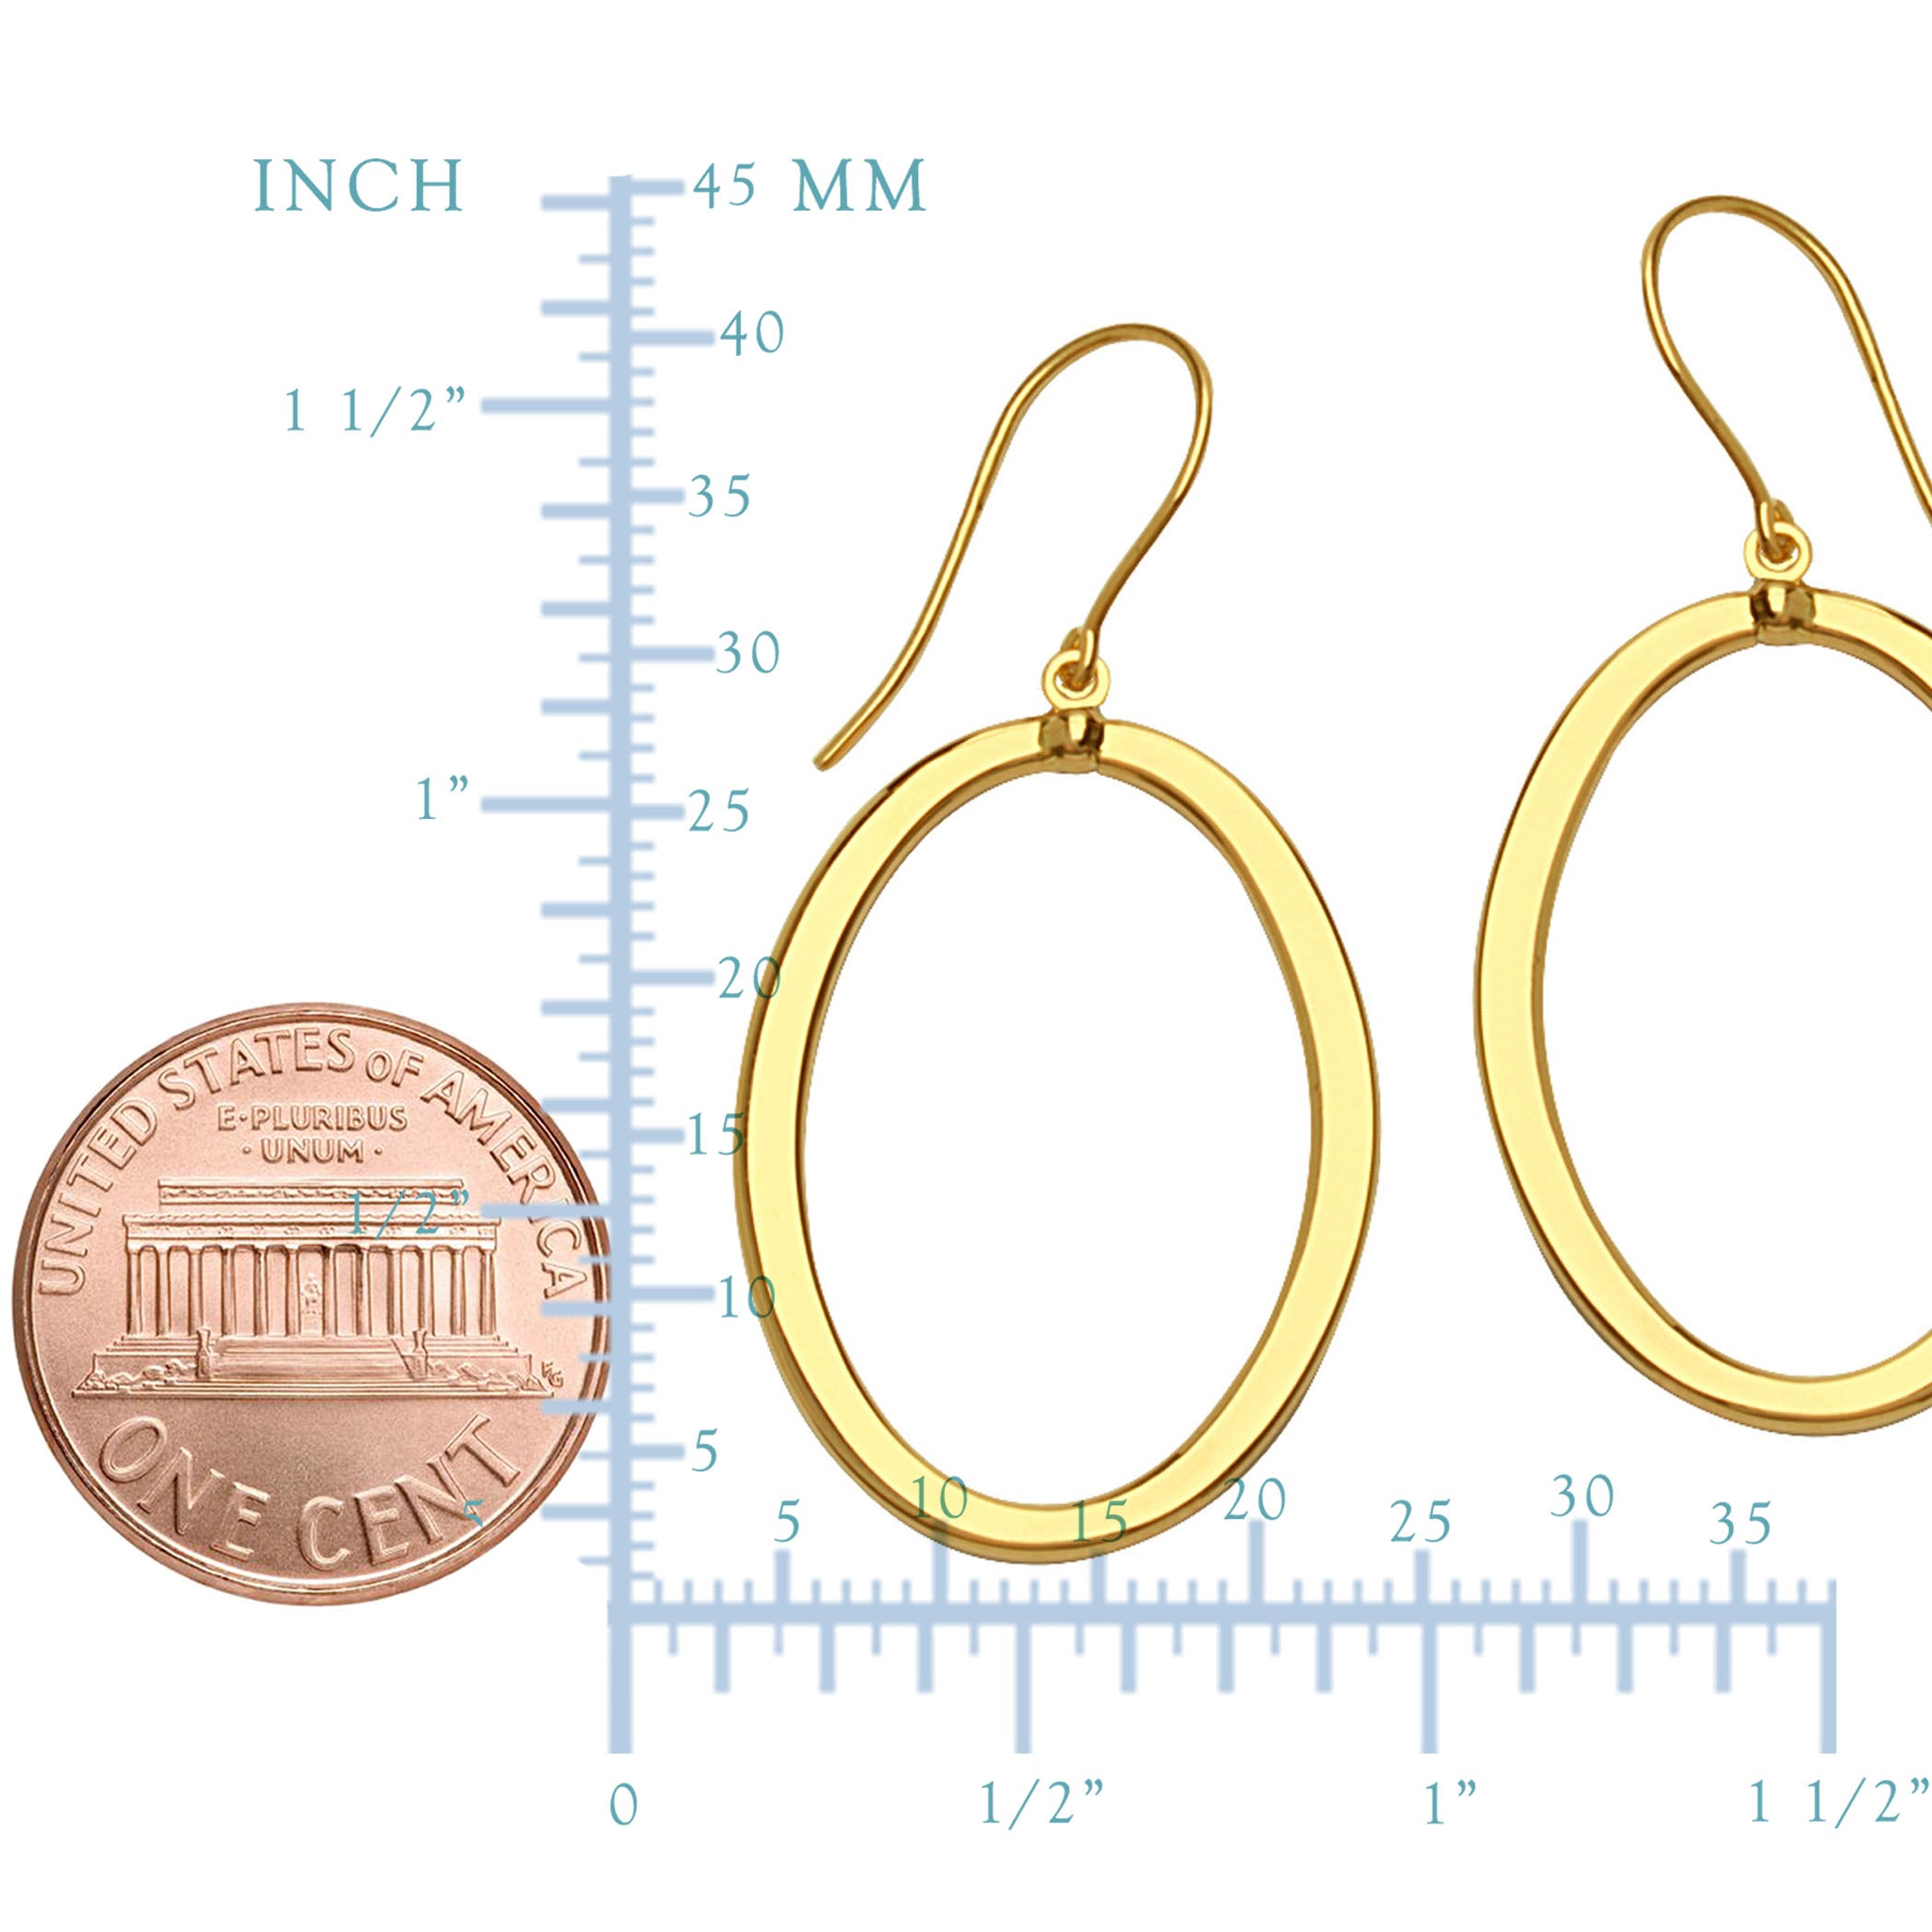 14K Yellow Gold Shiny Oval Drop Earrings fine designer jewelry for men and women